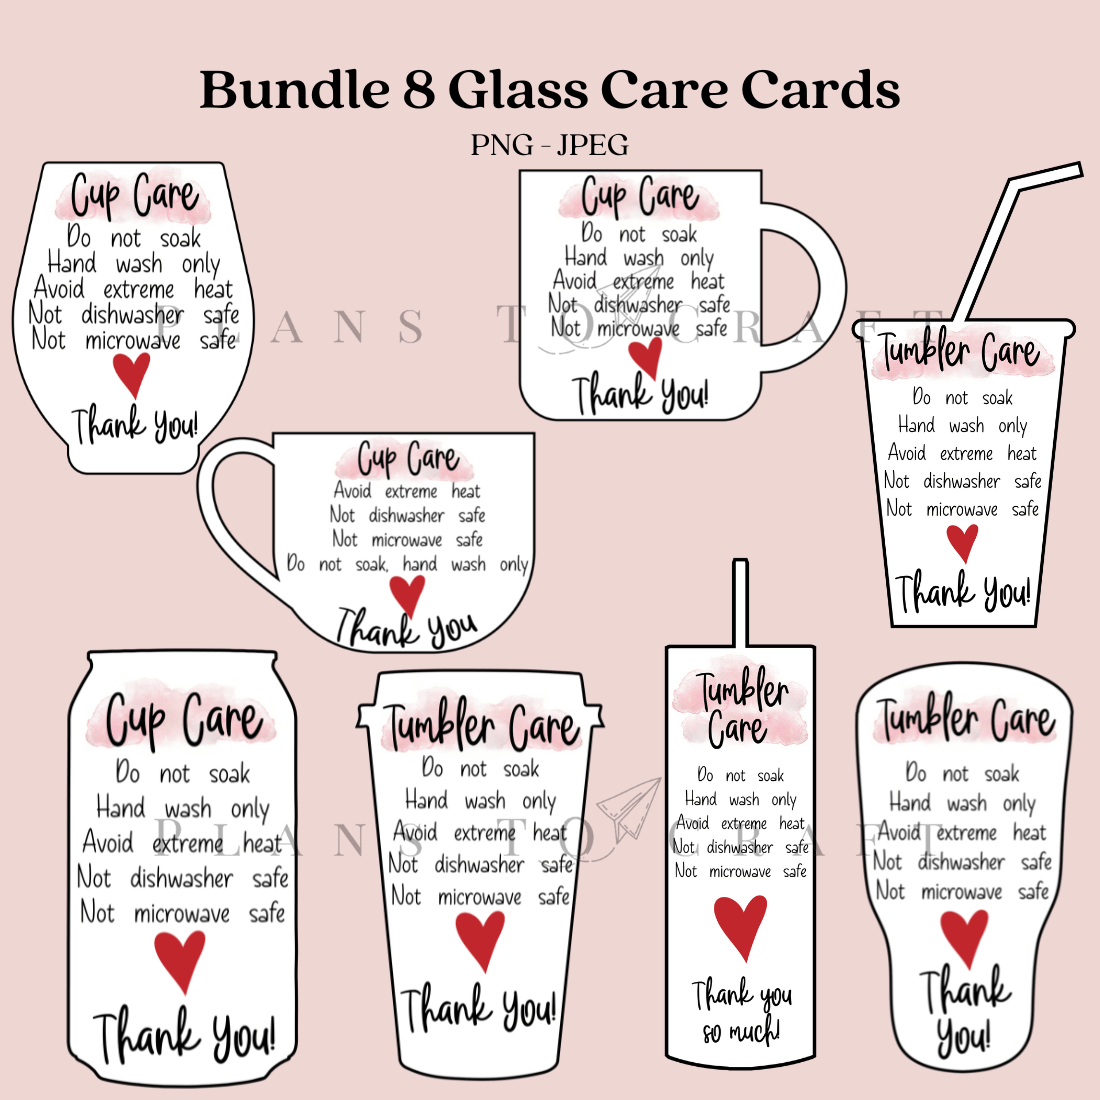 Bundle 8 Glass Care Cards Instruction - MasterBundles